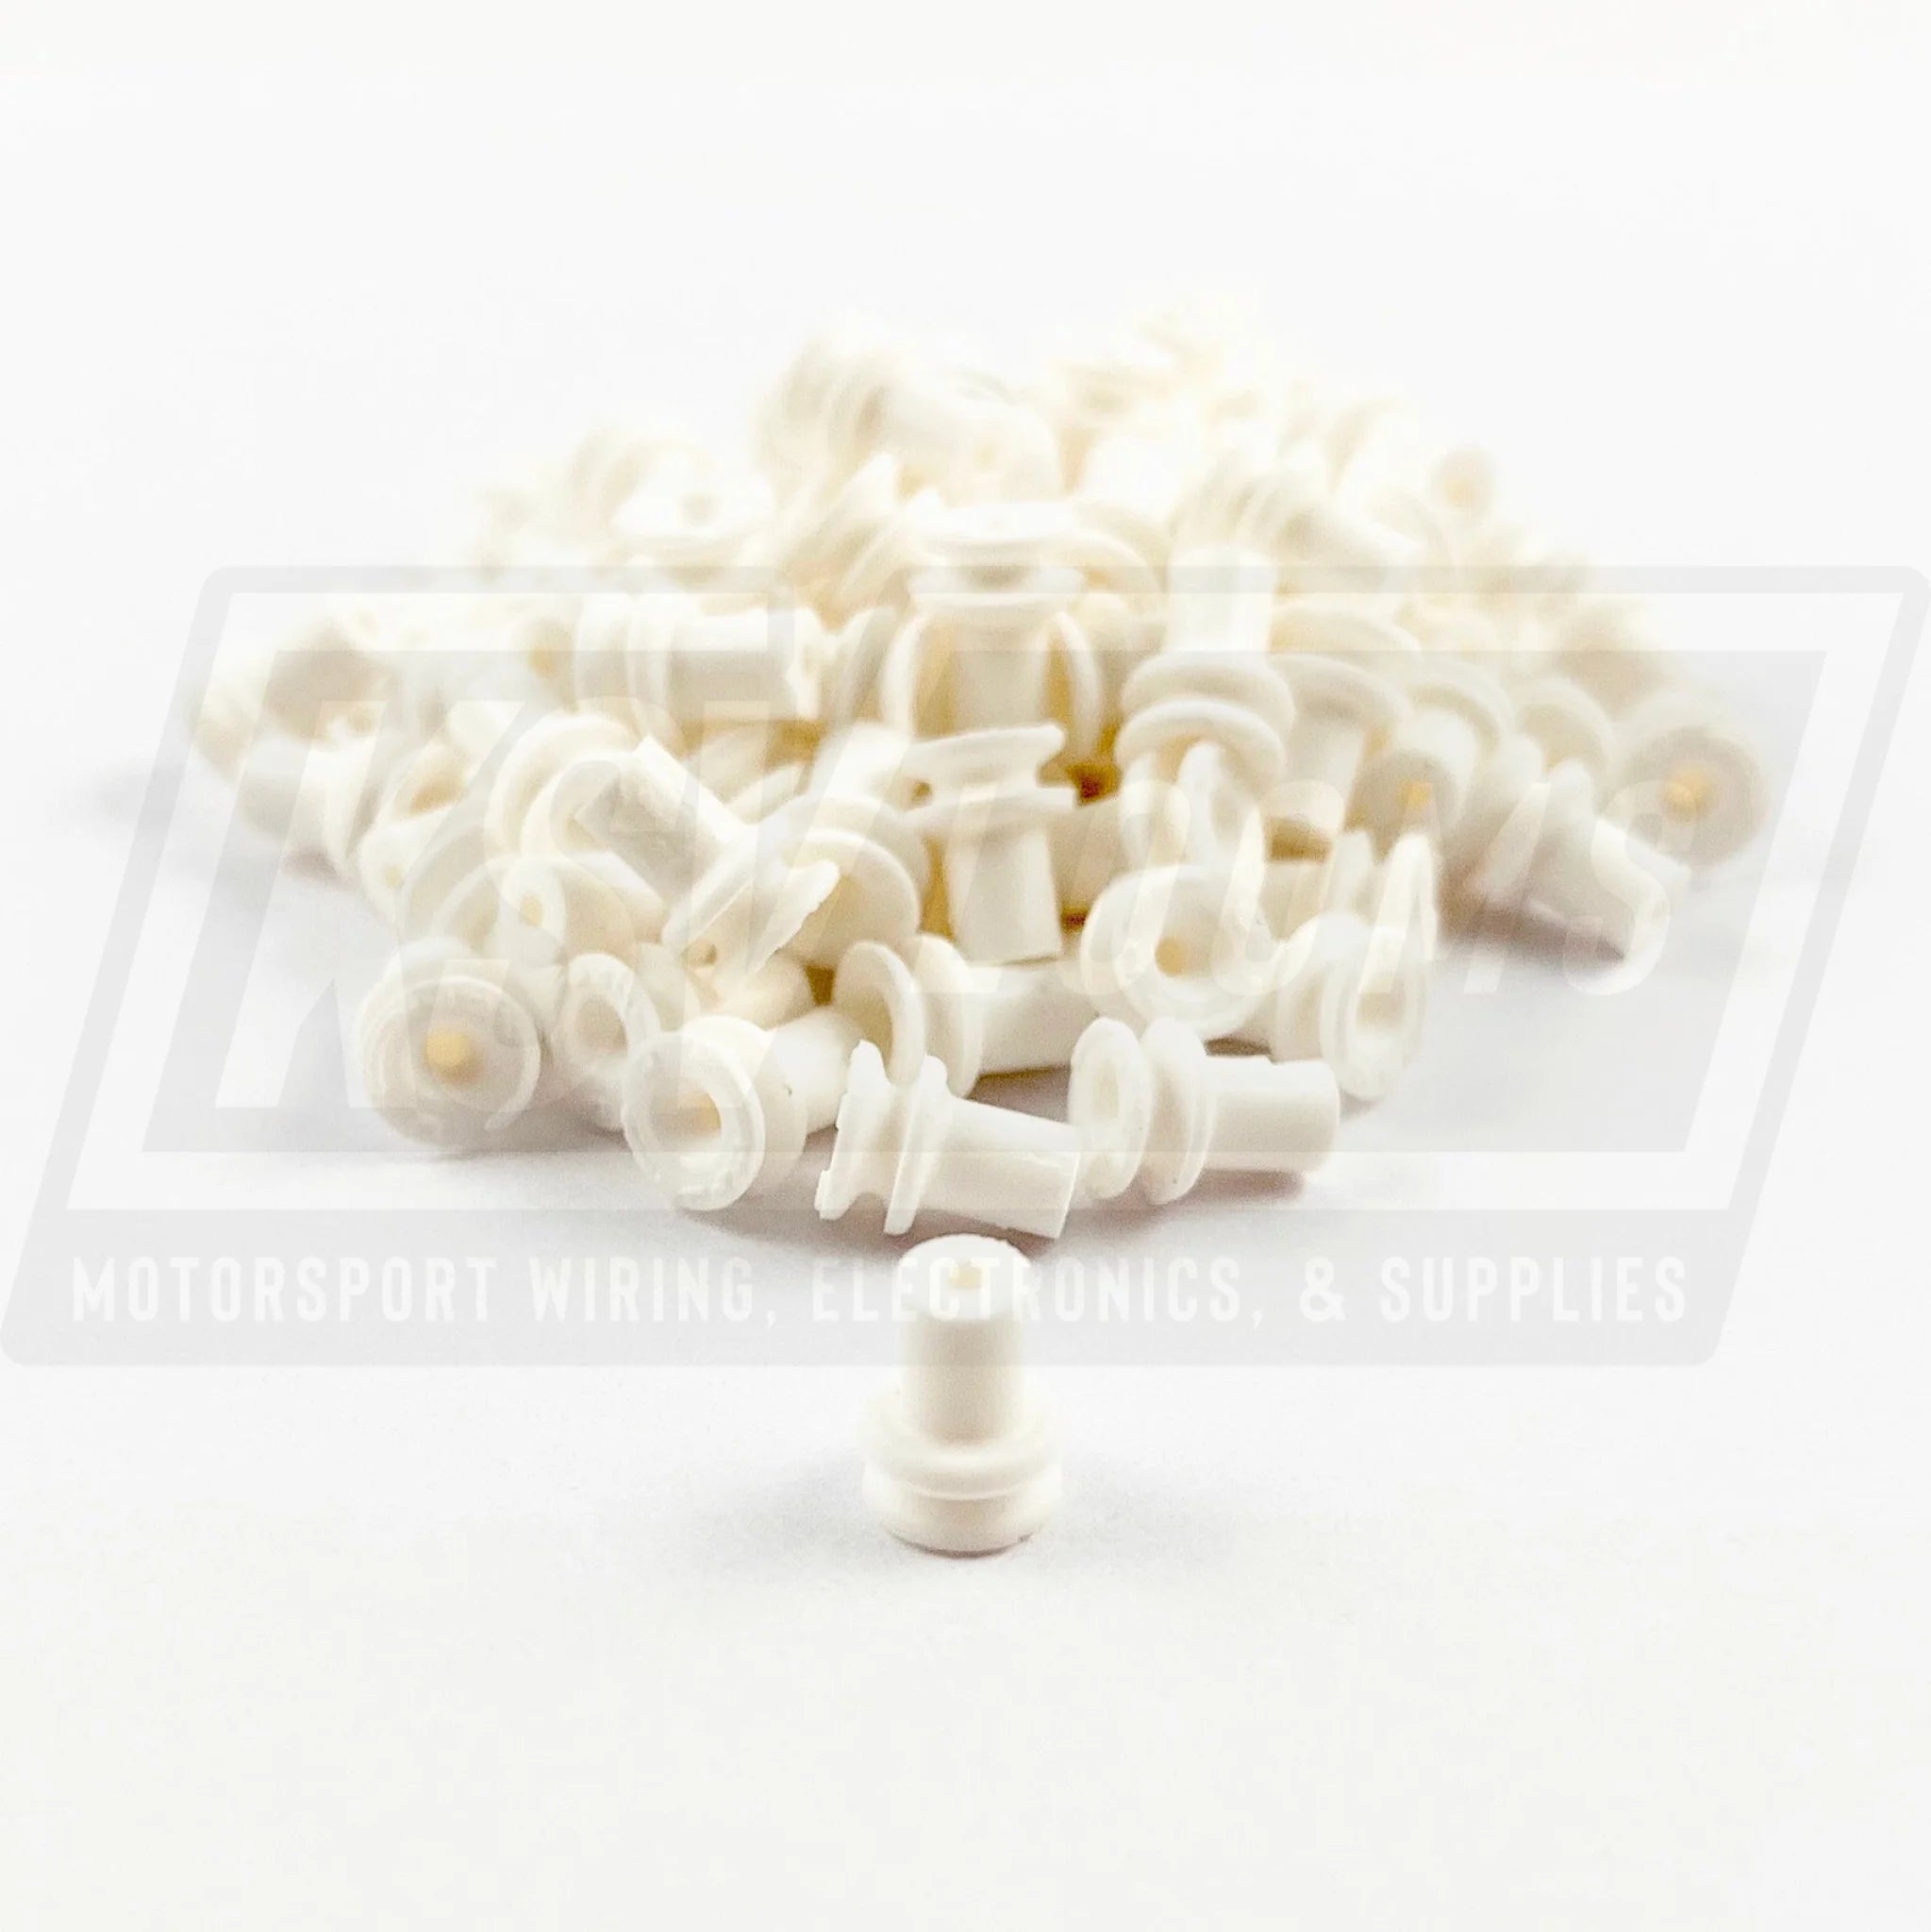 Wire Seal Aptiv (Delphi) 15366021 Gt150 Sealed Series White (1.20-1.85Mm)